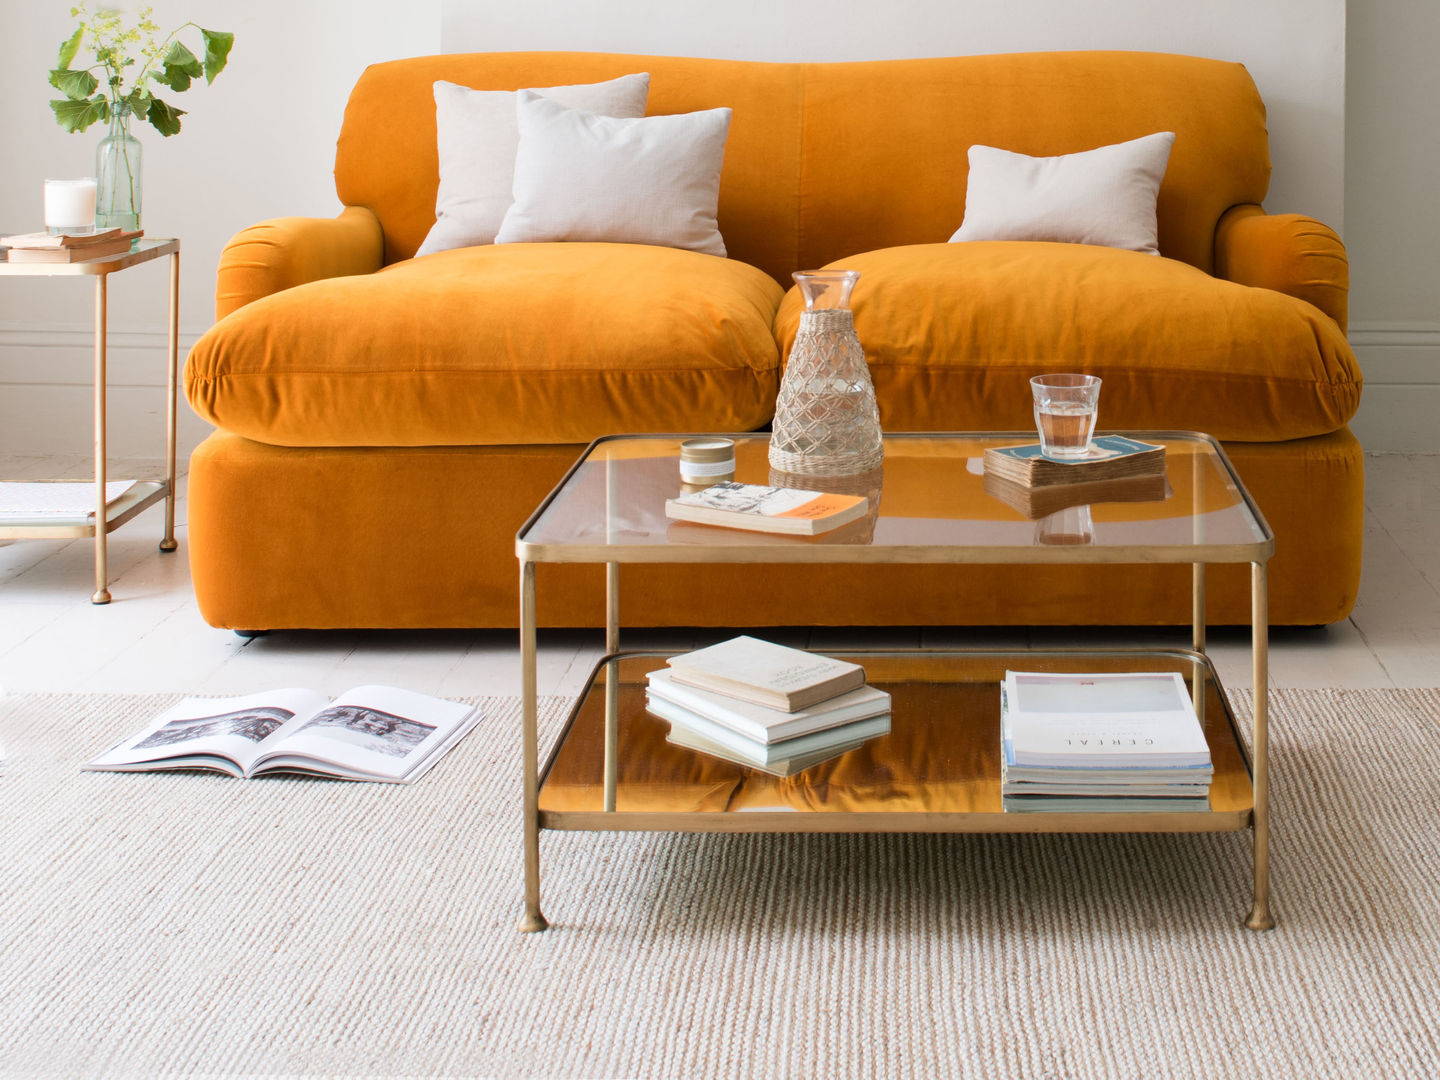 Wonder-Boy coffee table Loaf Ruang Keluarga Modern brass,glass,coffee table,table,living room,orange sofa,sofa